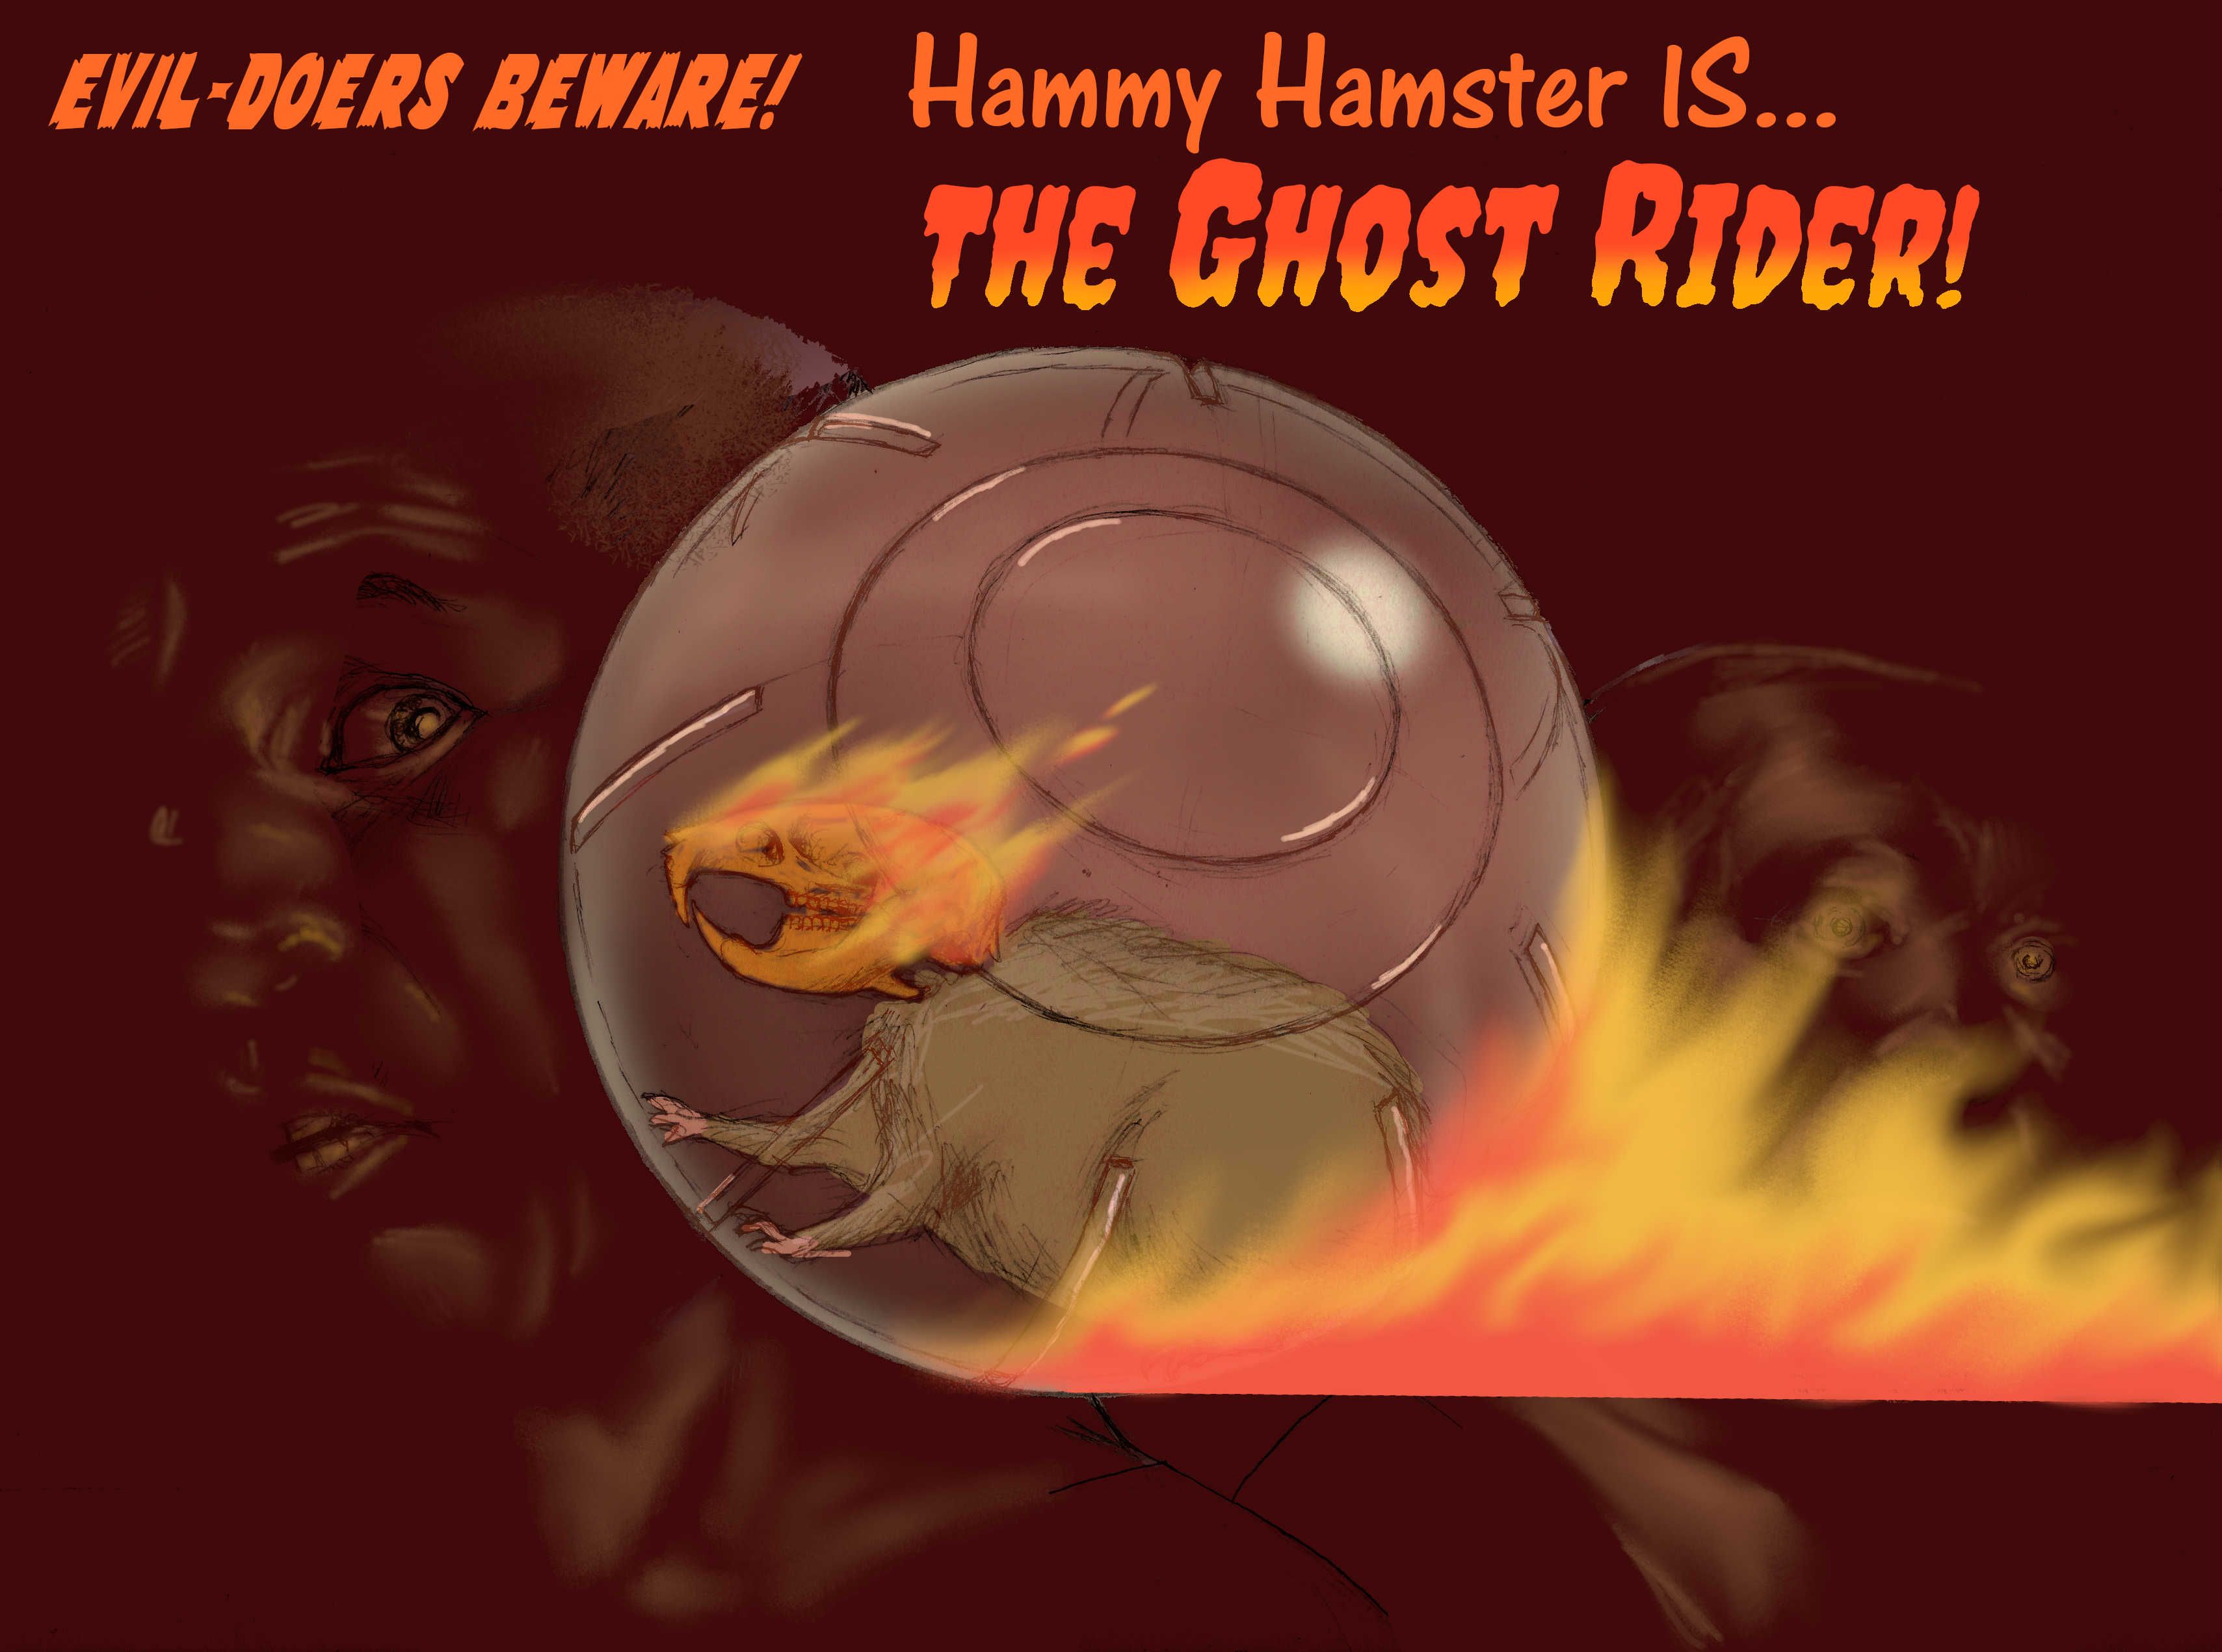 line-7-30-2-super-pets-ghost-rider-hamster